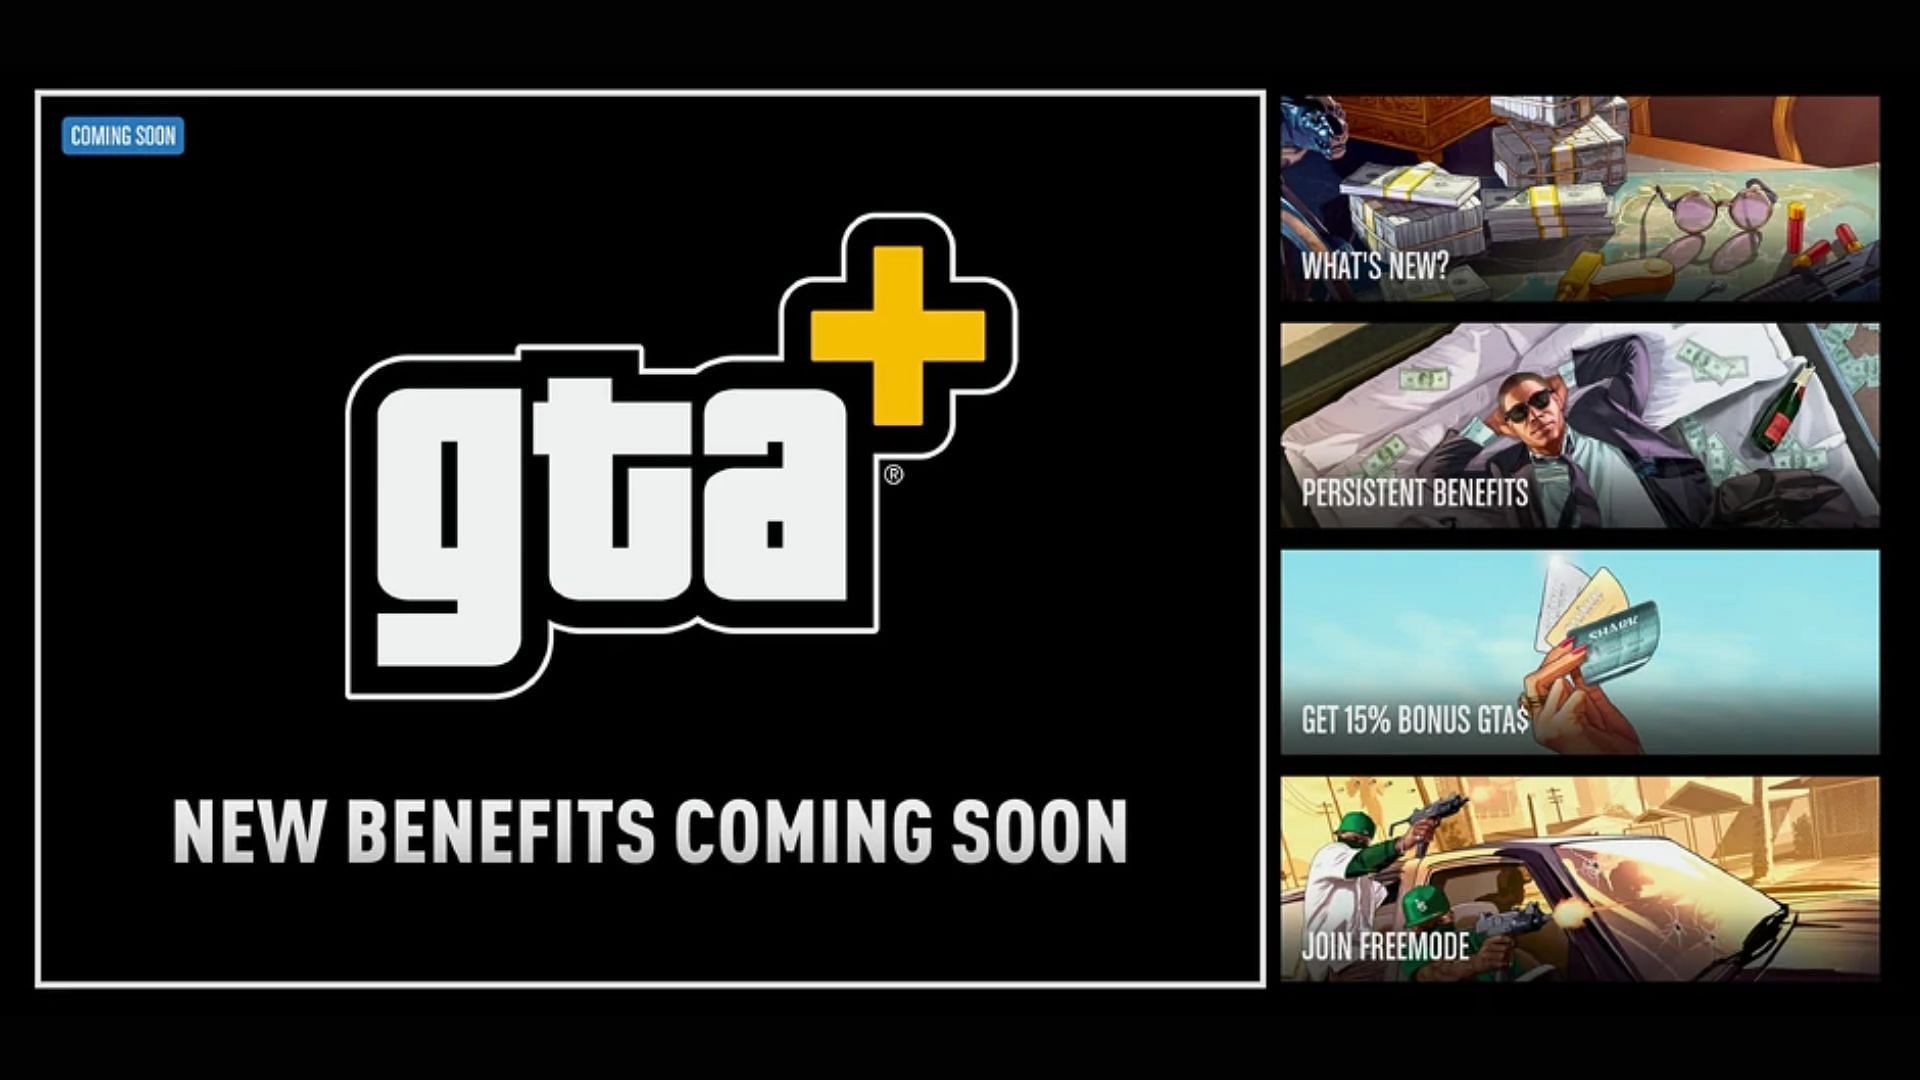 GTA Plus benefits